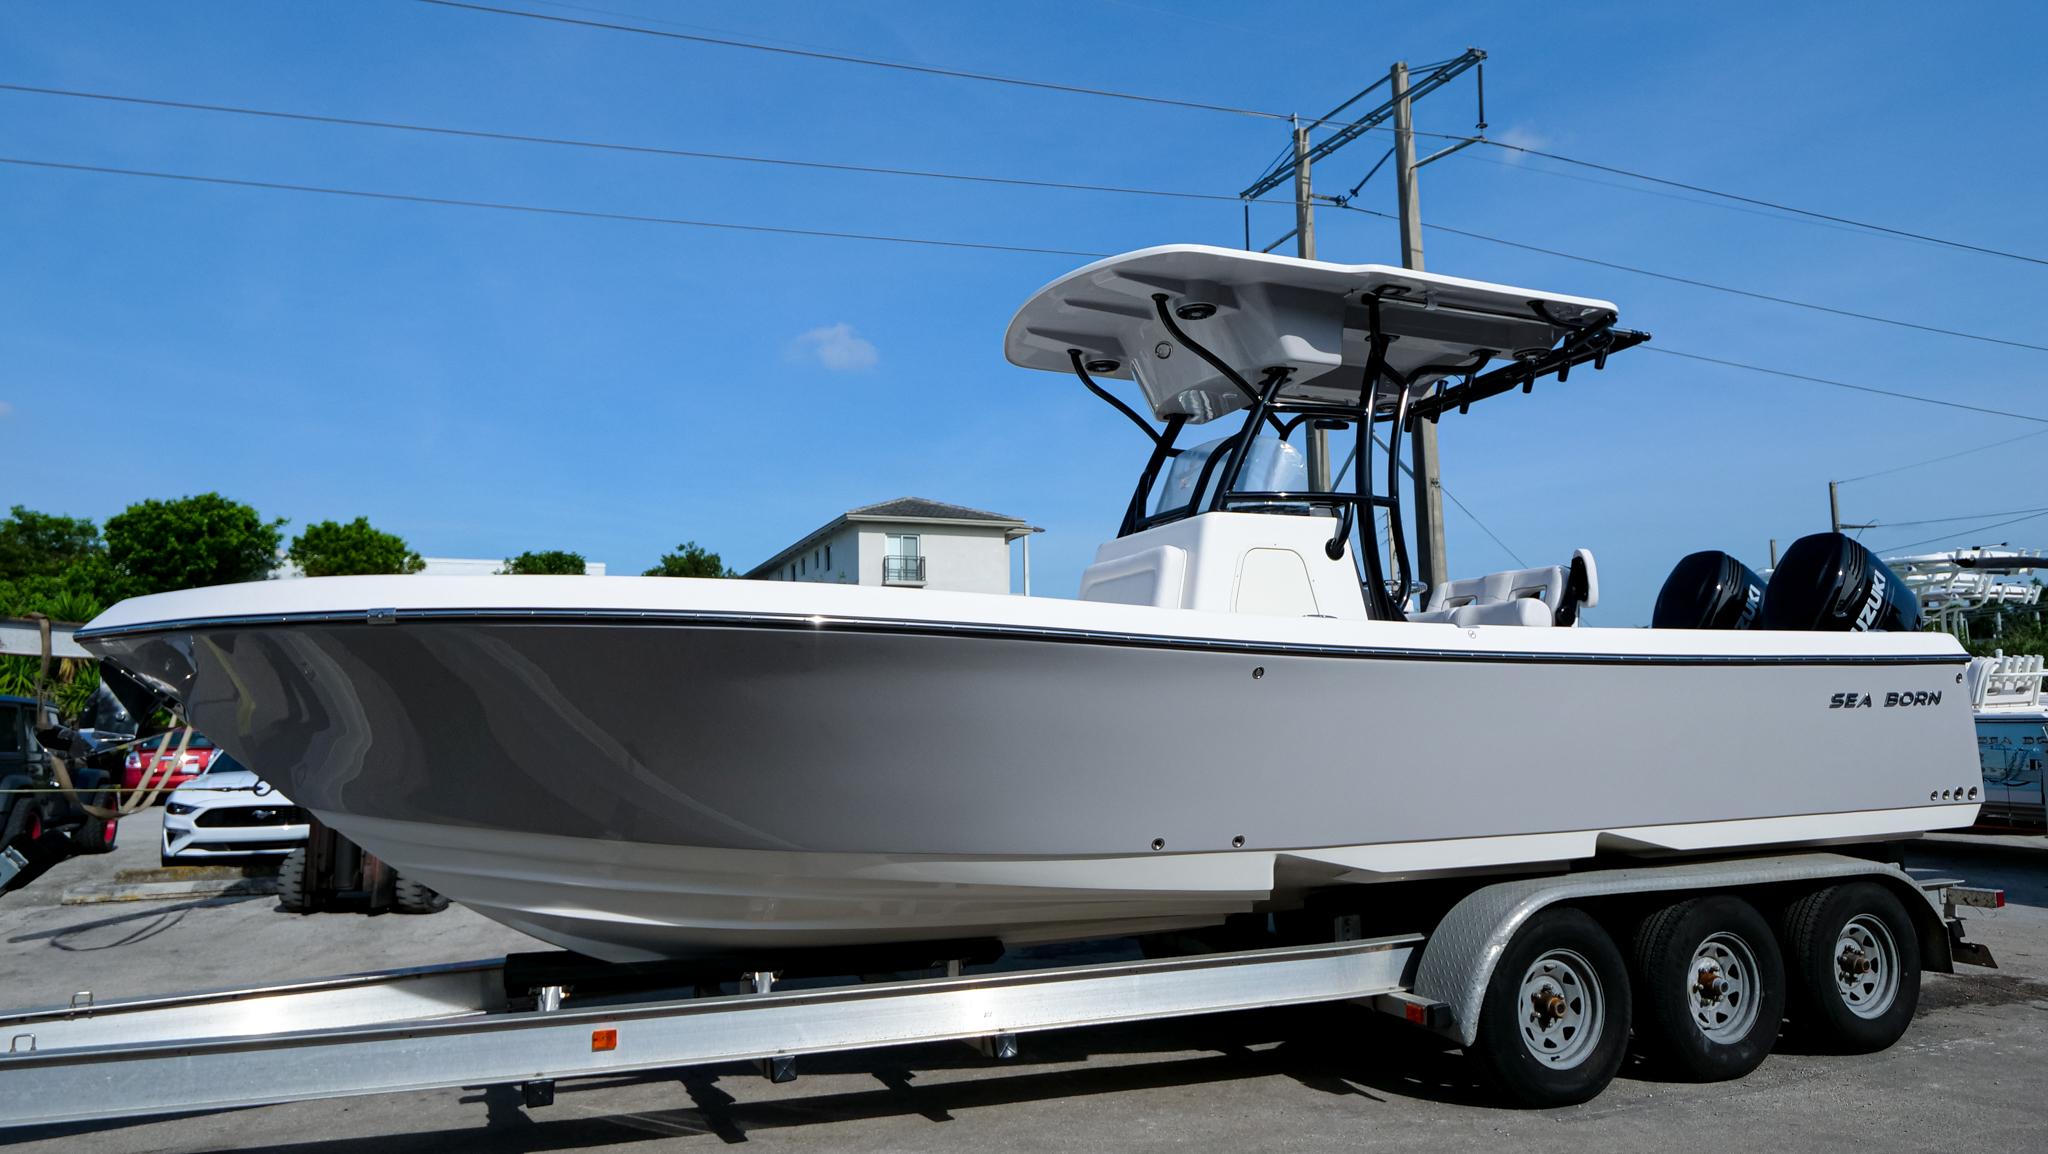 2021 Sea Born LX24 LE - boats - by owner - marine sale - craigslist